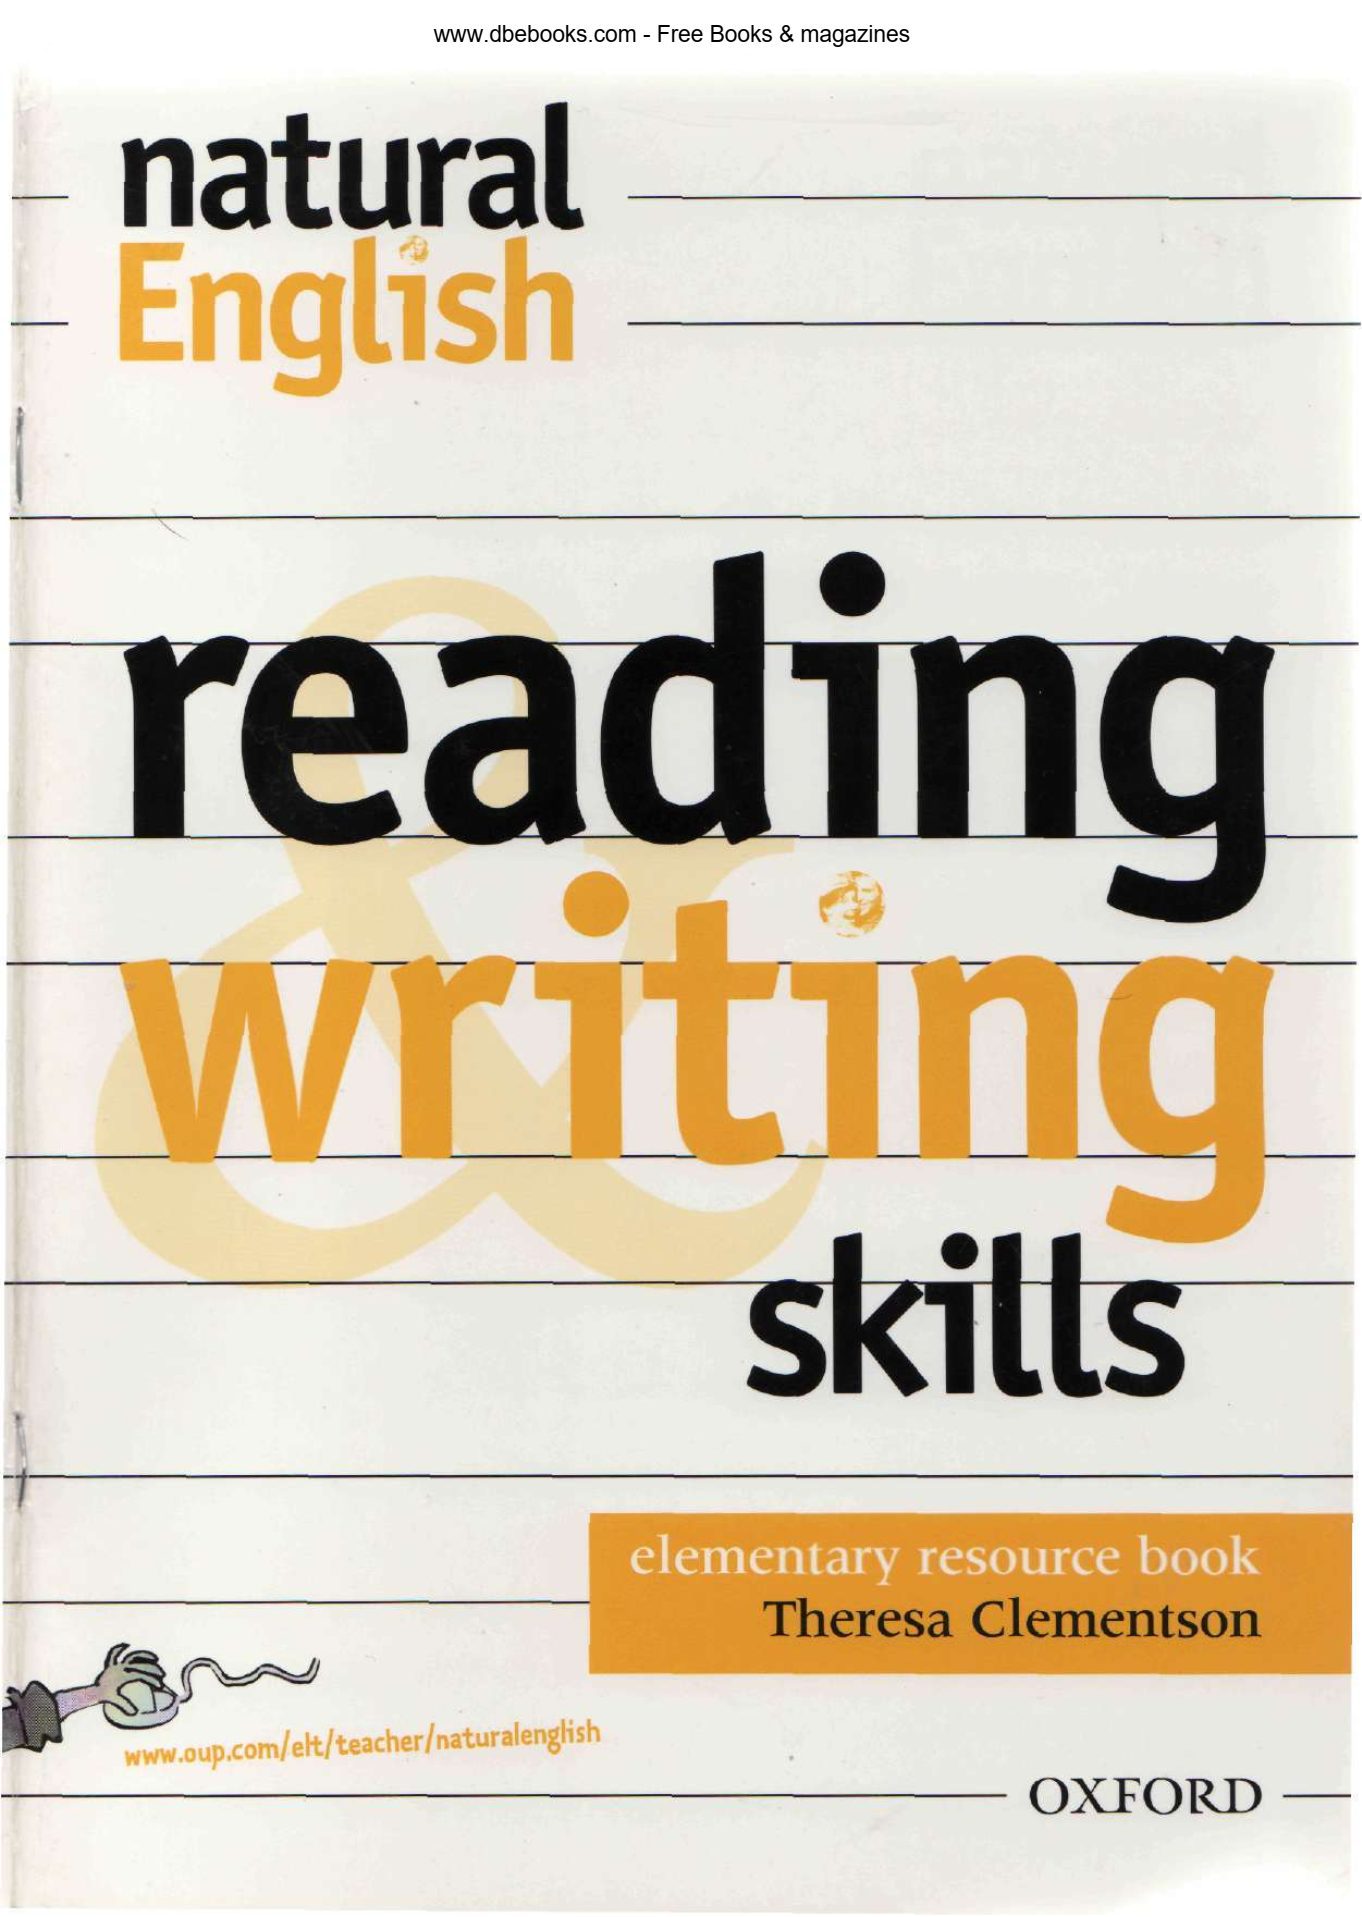 Elementary skills. Elementary English. Oxford writing skills. Reading and writing skills. English Elementary book.